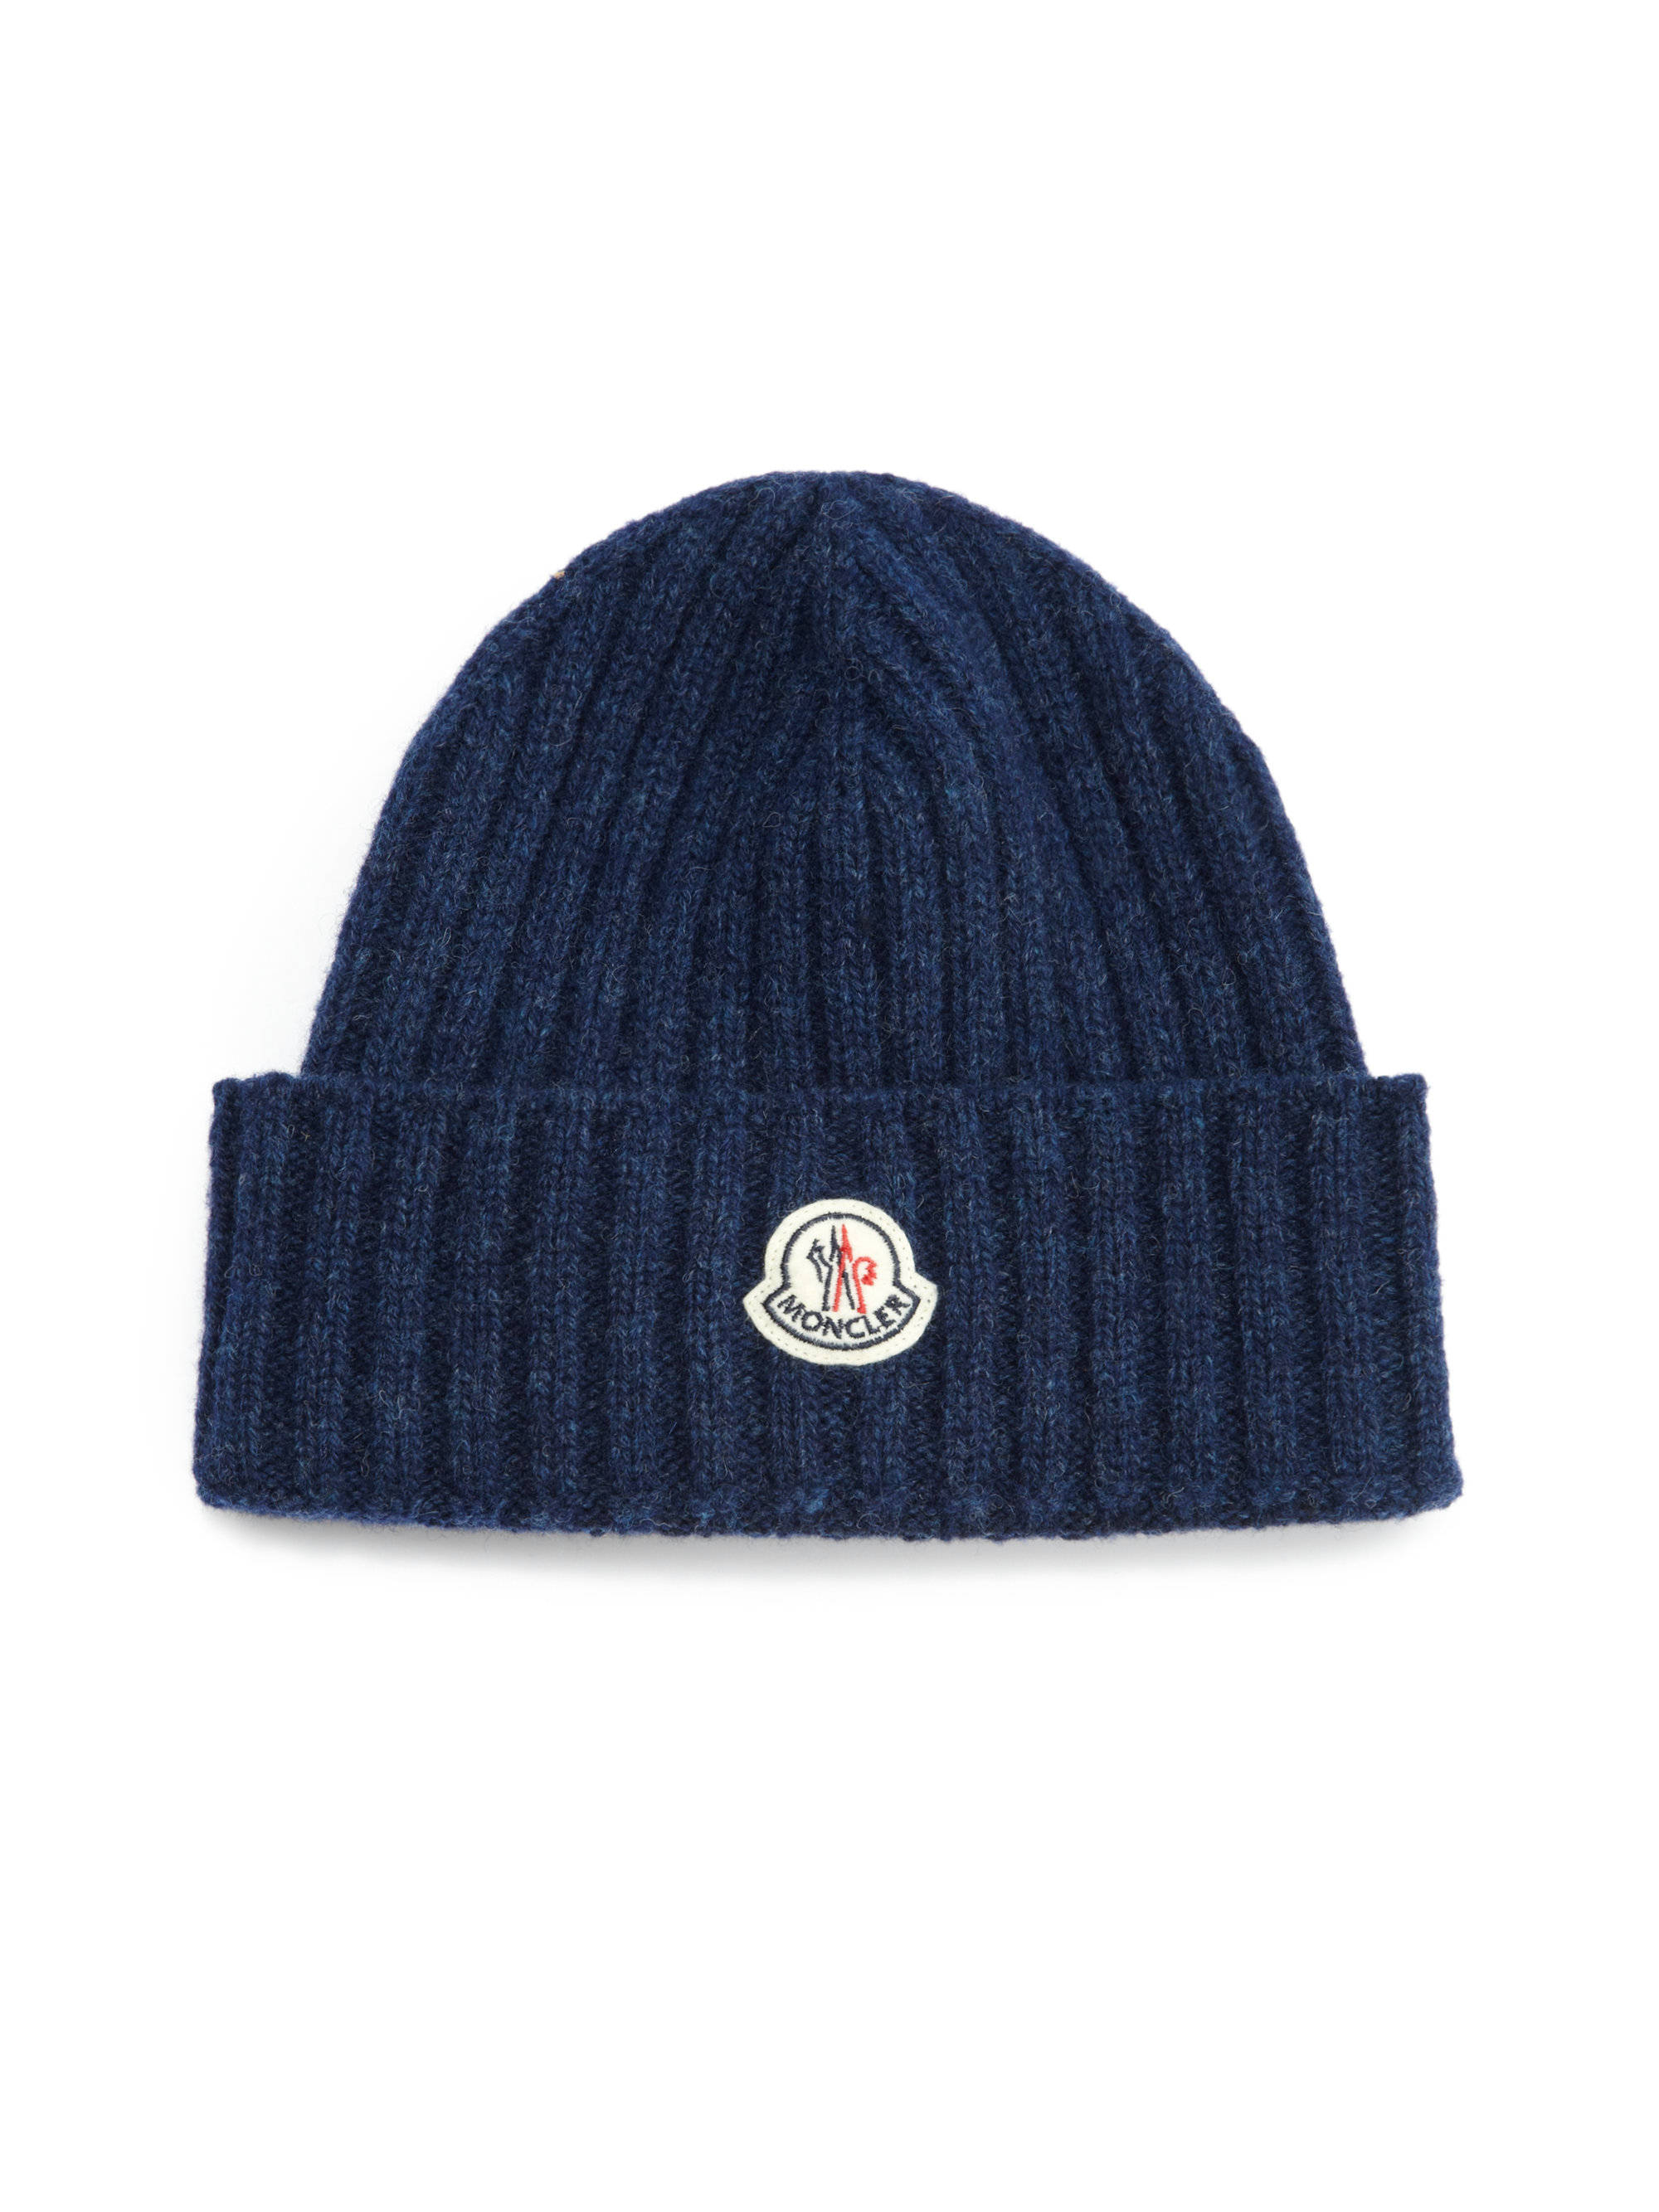 Lyst - Moncler Wool Hat in Blue for Men